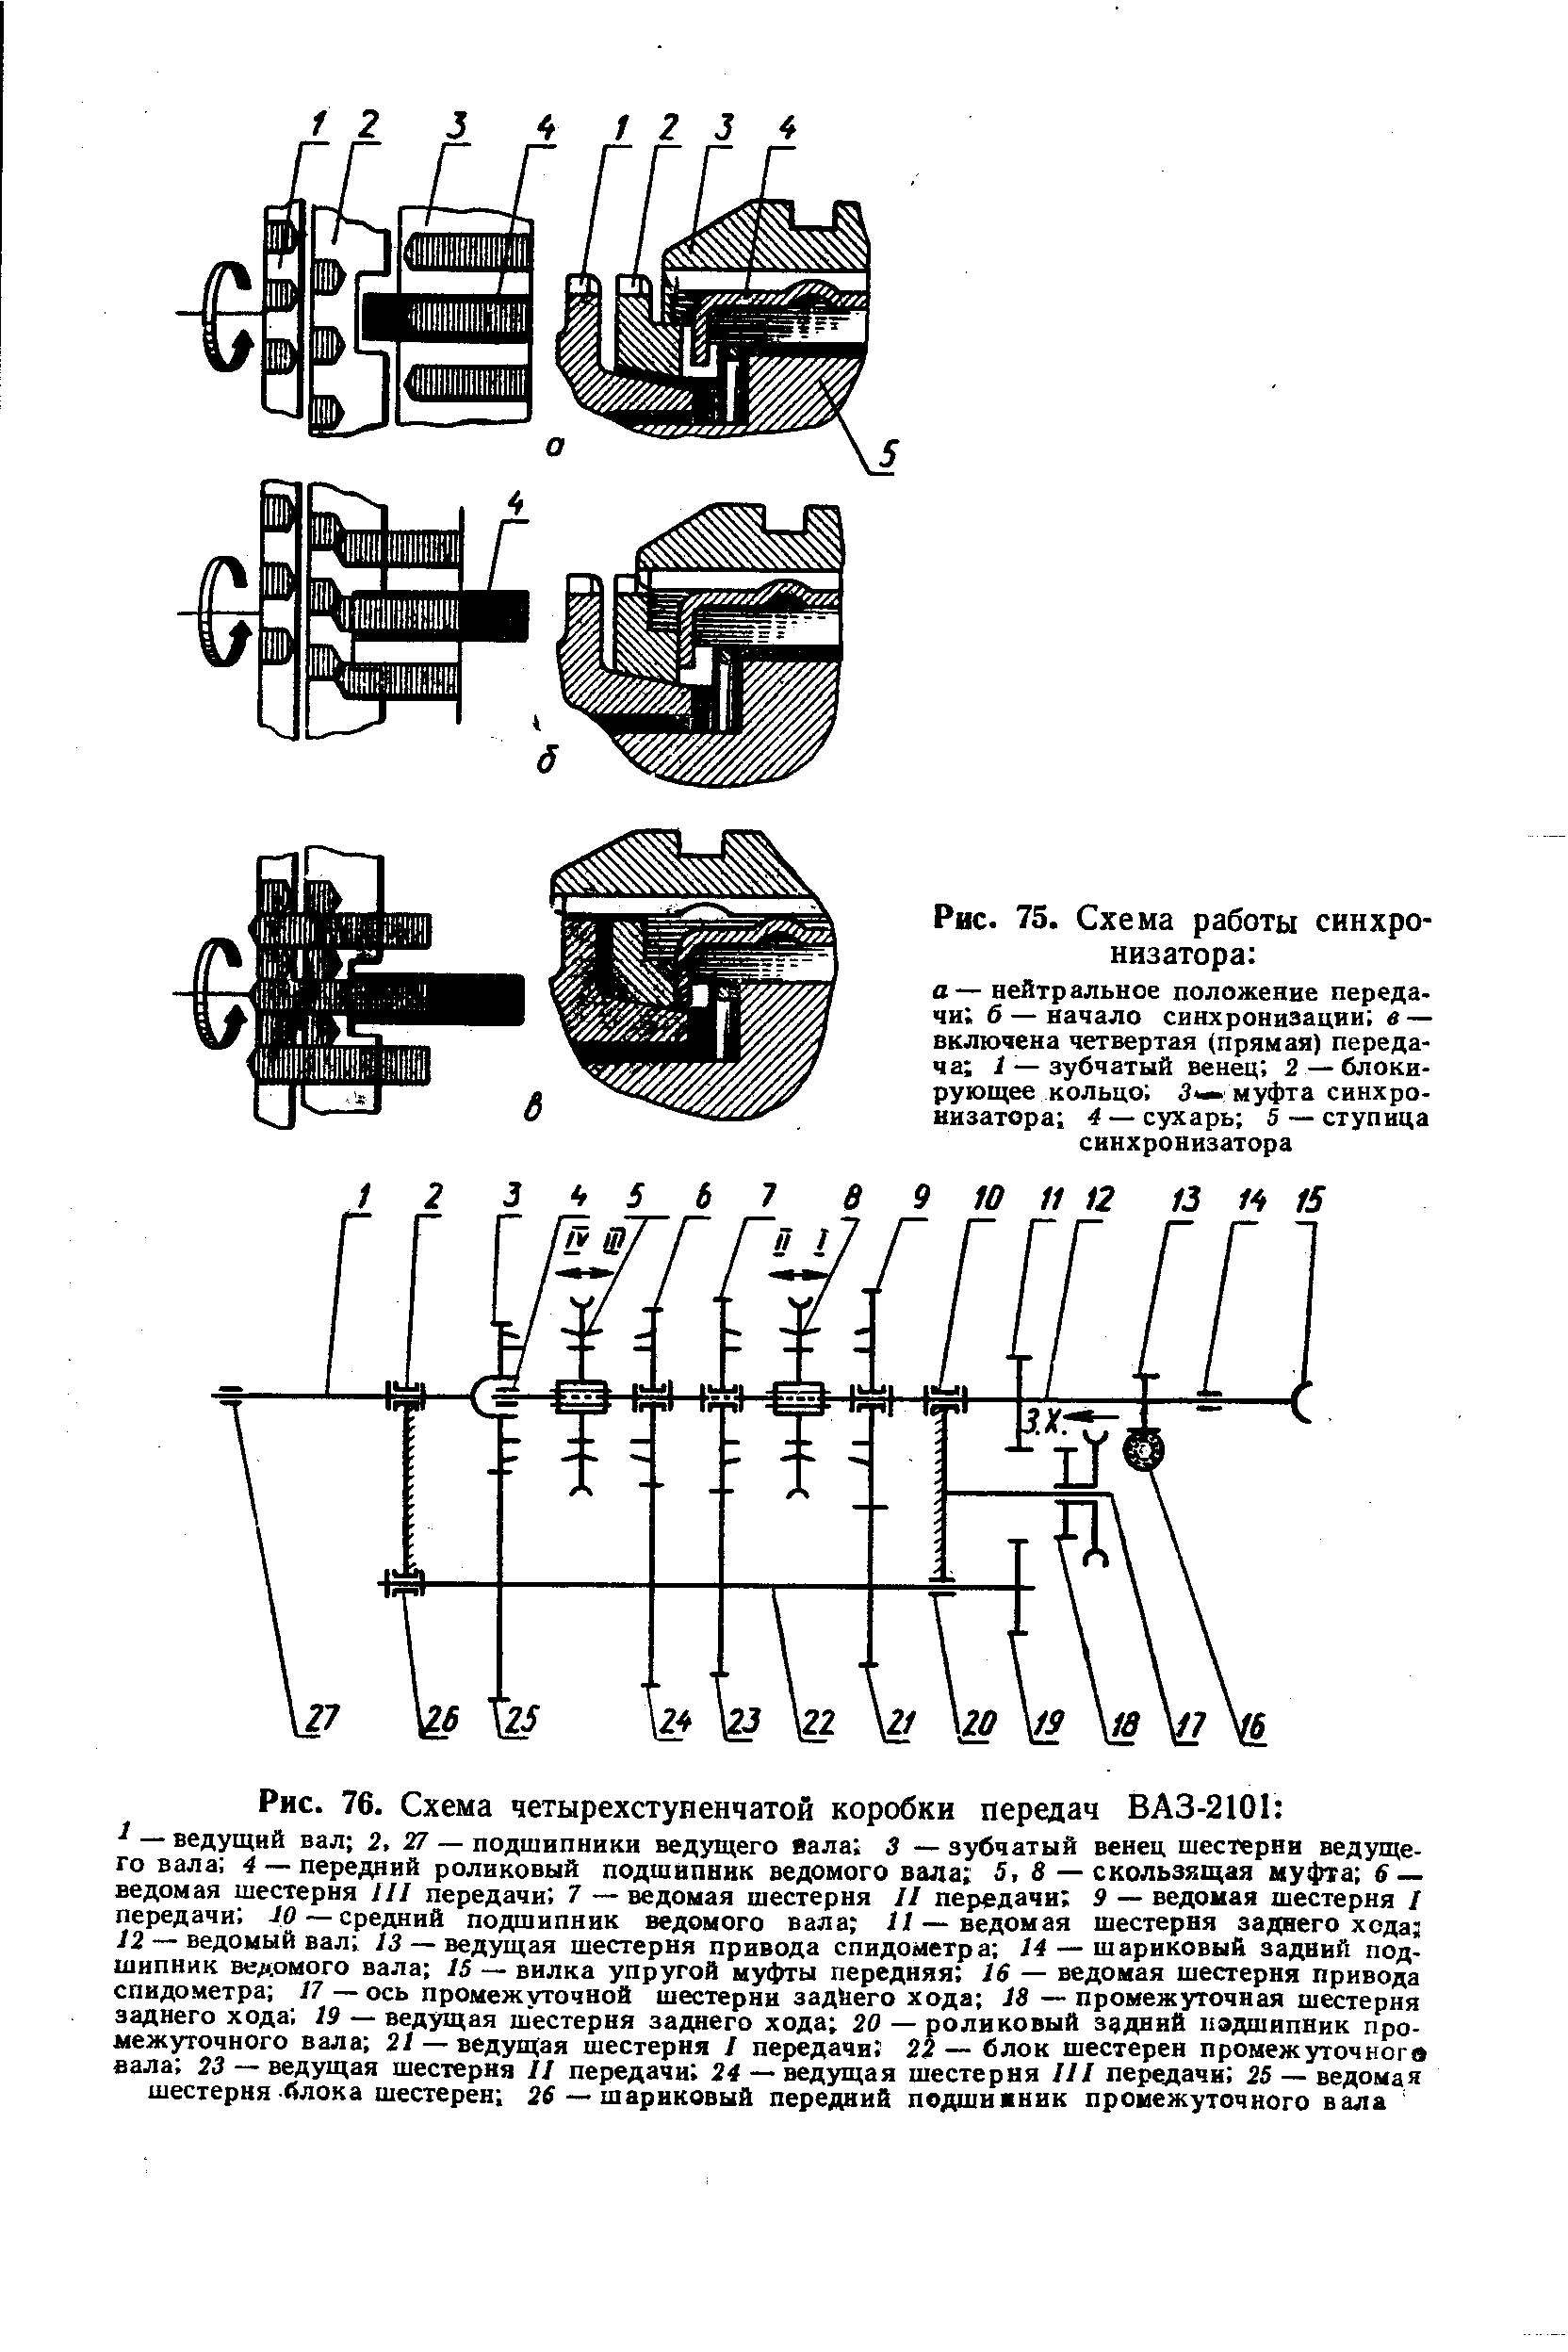 Рис. 76. Схема четырехступенчатой коробки передач ВАЗ-2101 